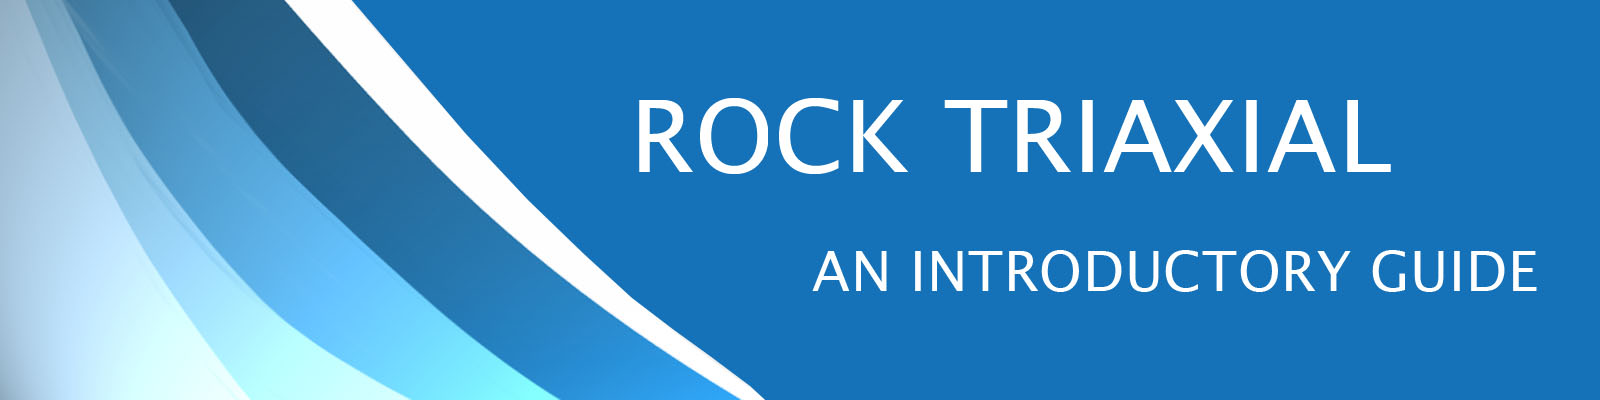 Rock Triaxial Information